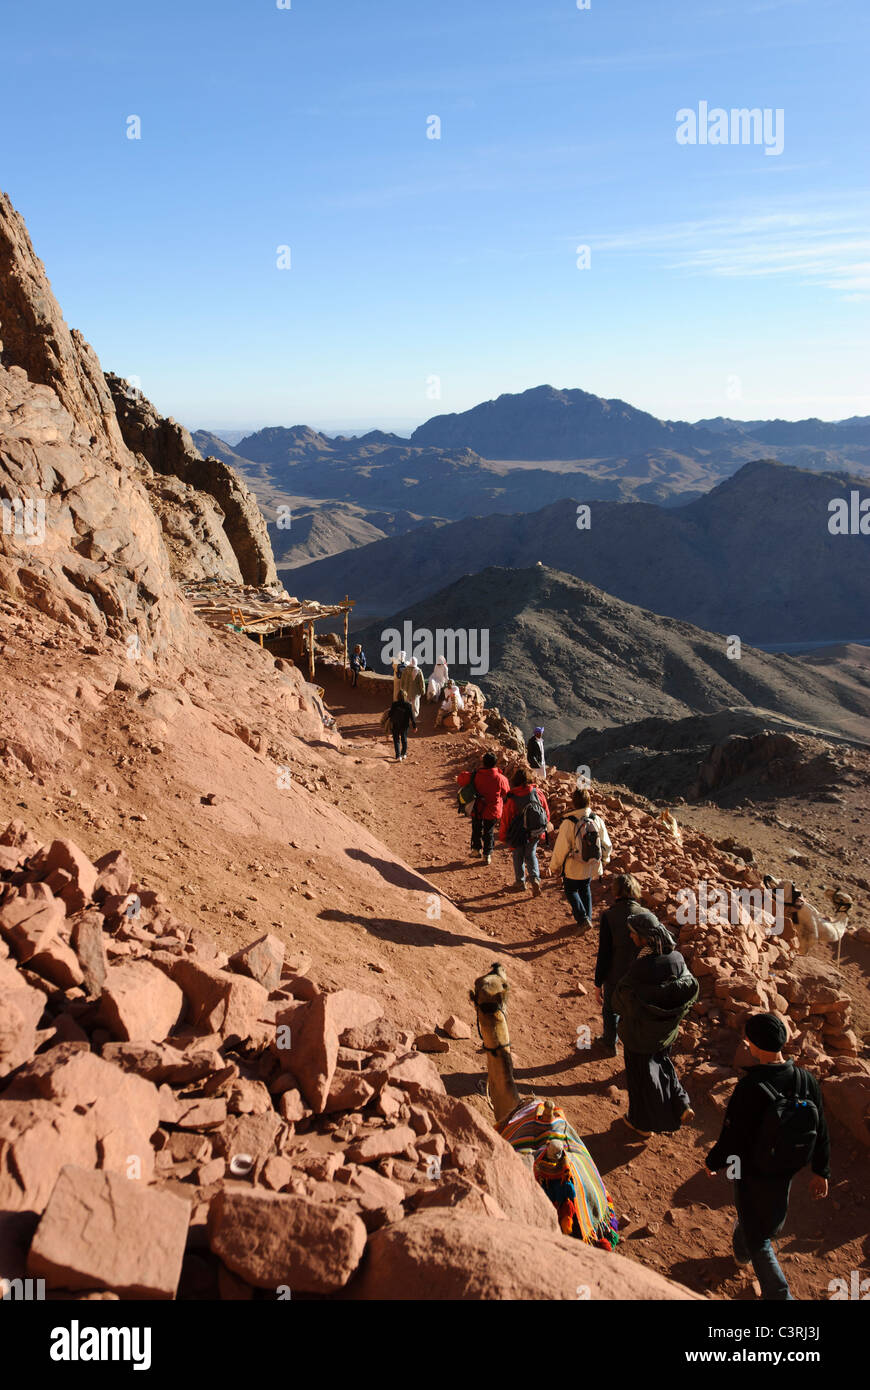 Tourists descending the mountain - Mount Sinai - St. Catherine Protectorate, Egypt Stock Photo